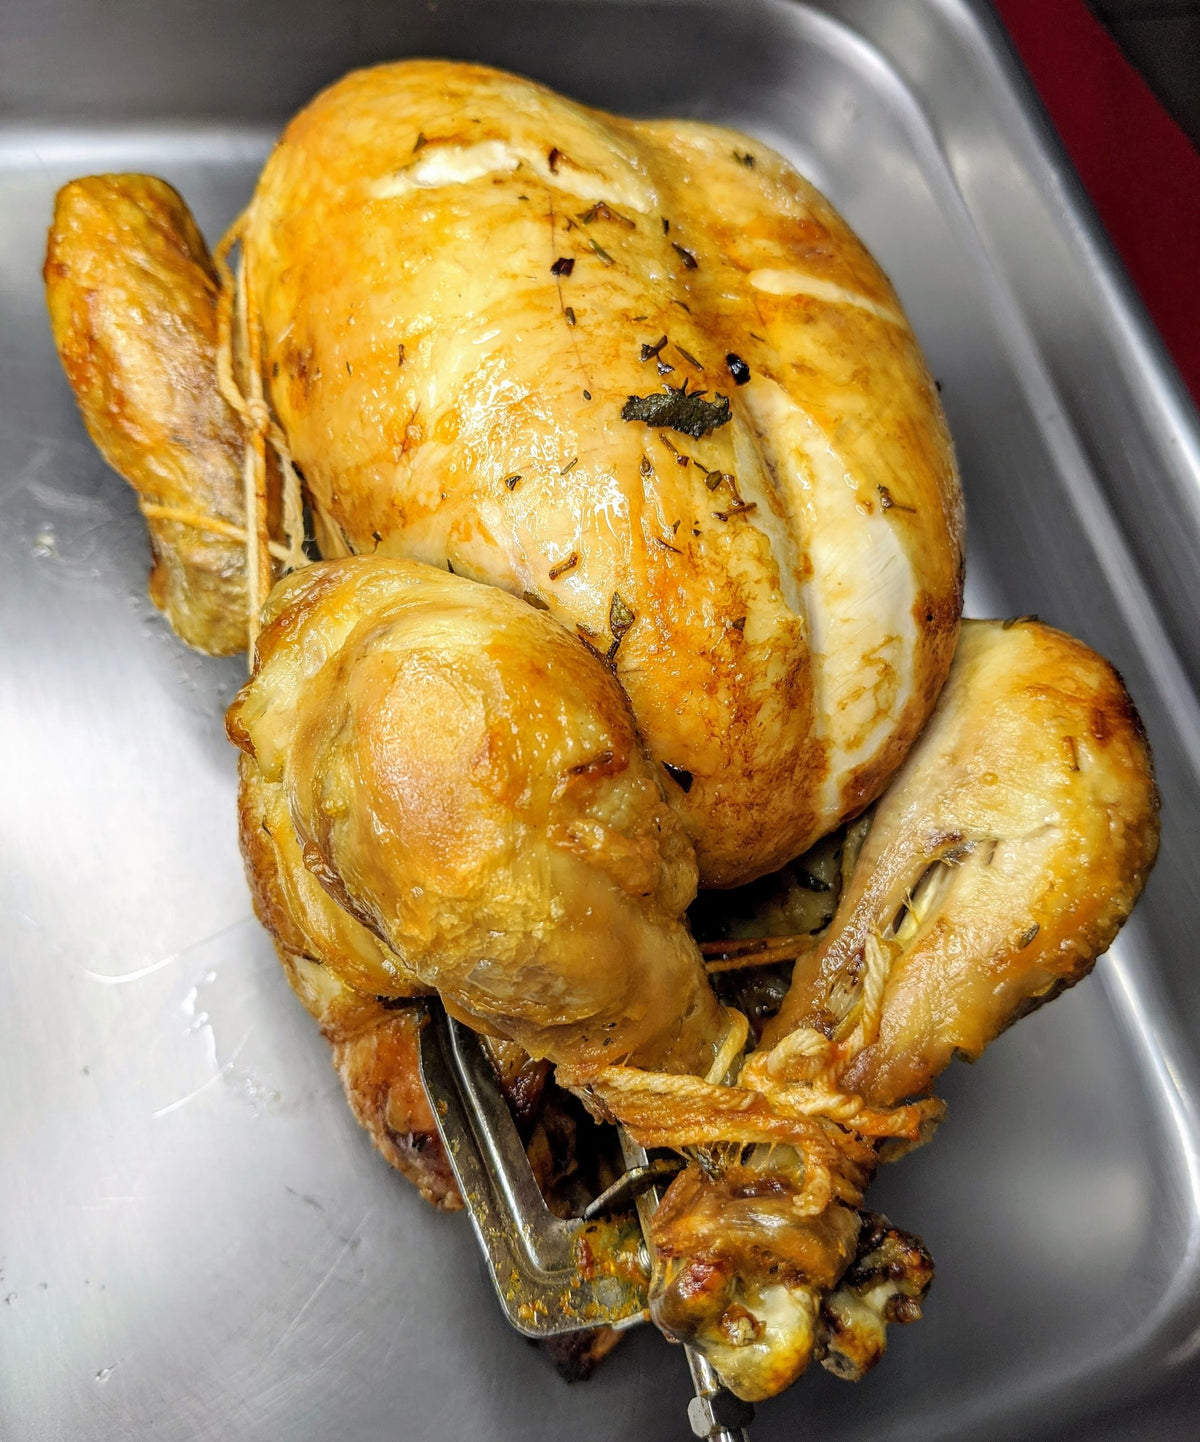 Organic Chicken, Whole: Frozen - 2 Chickens (2.5-3.5 lbs Avg. Each) - D'Artagnan